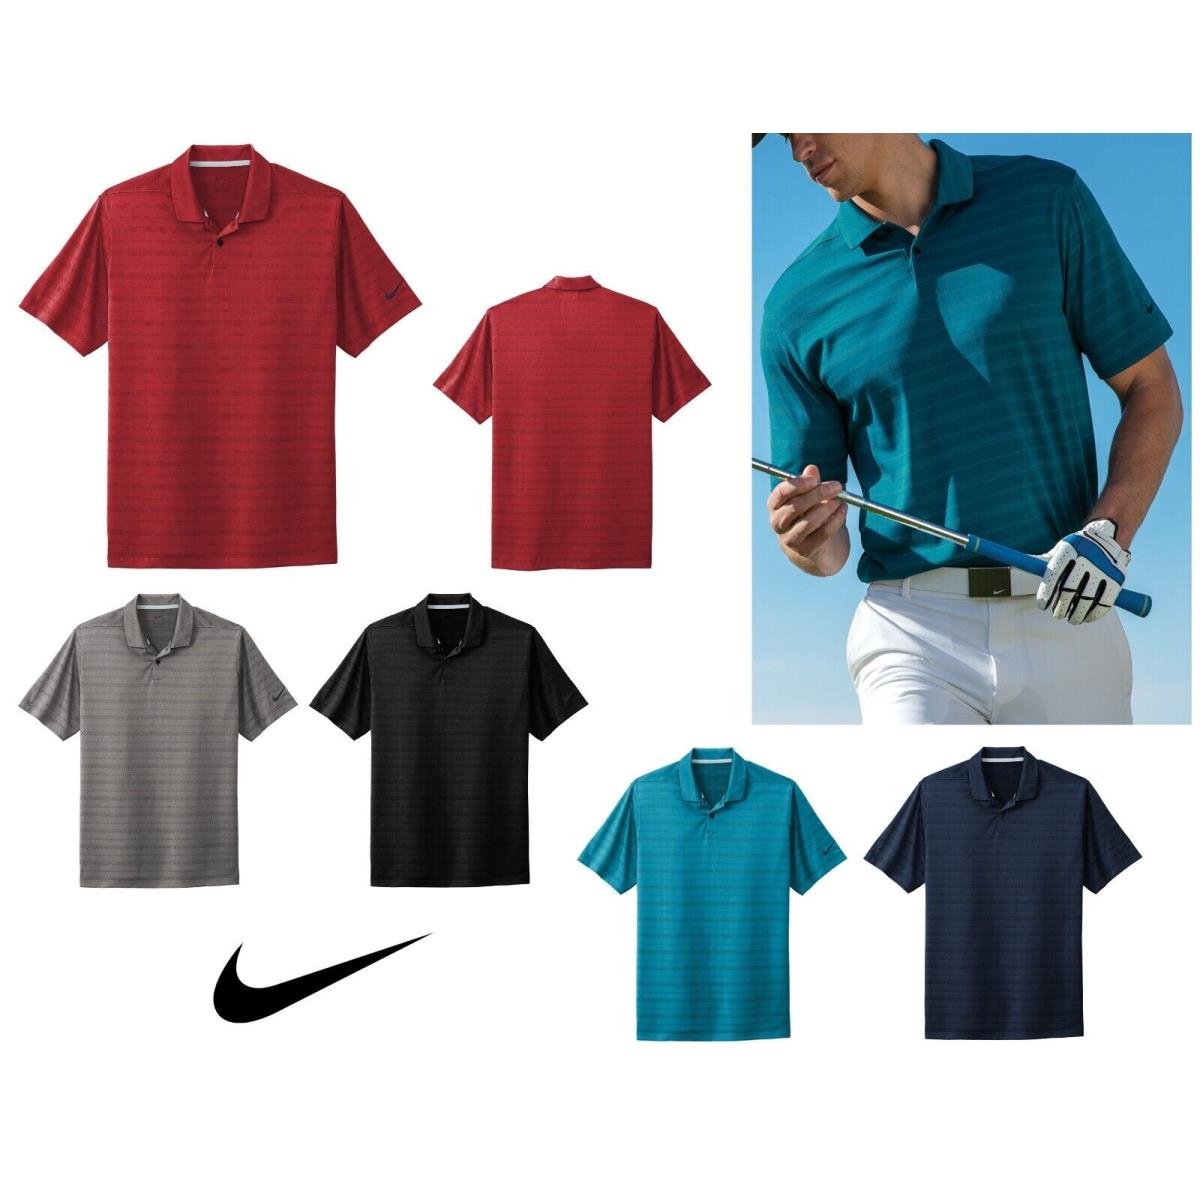 Men`s Nike Dri Fit Moisture Wicking Jacquard Stripe Polo Short Sleeve. XS-4XL - s: Black, Grey, Red, Marina, Navy Blue, Gray